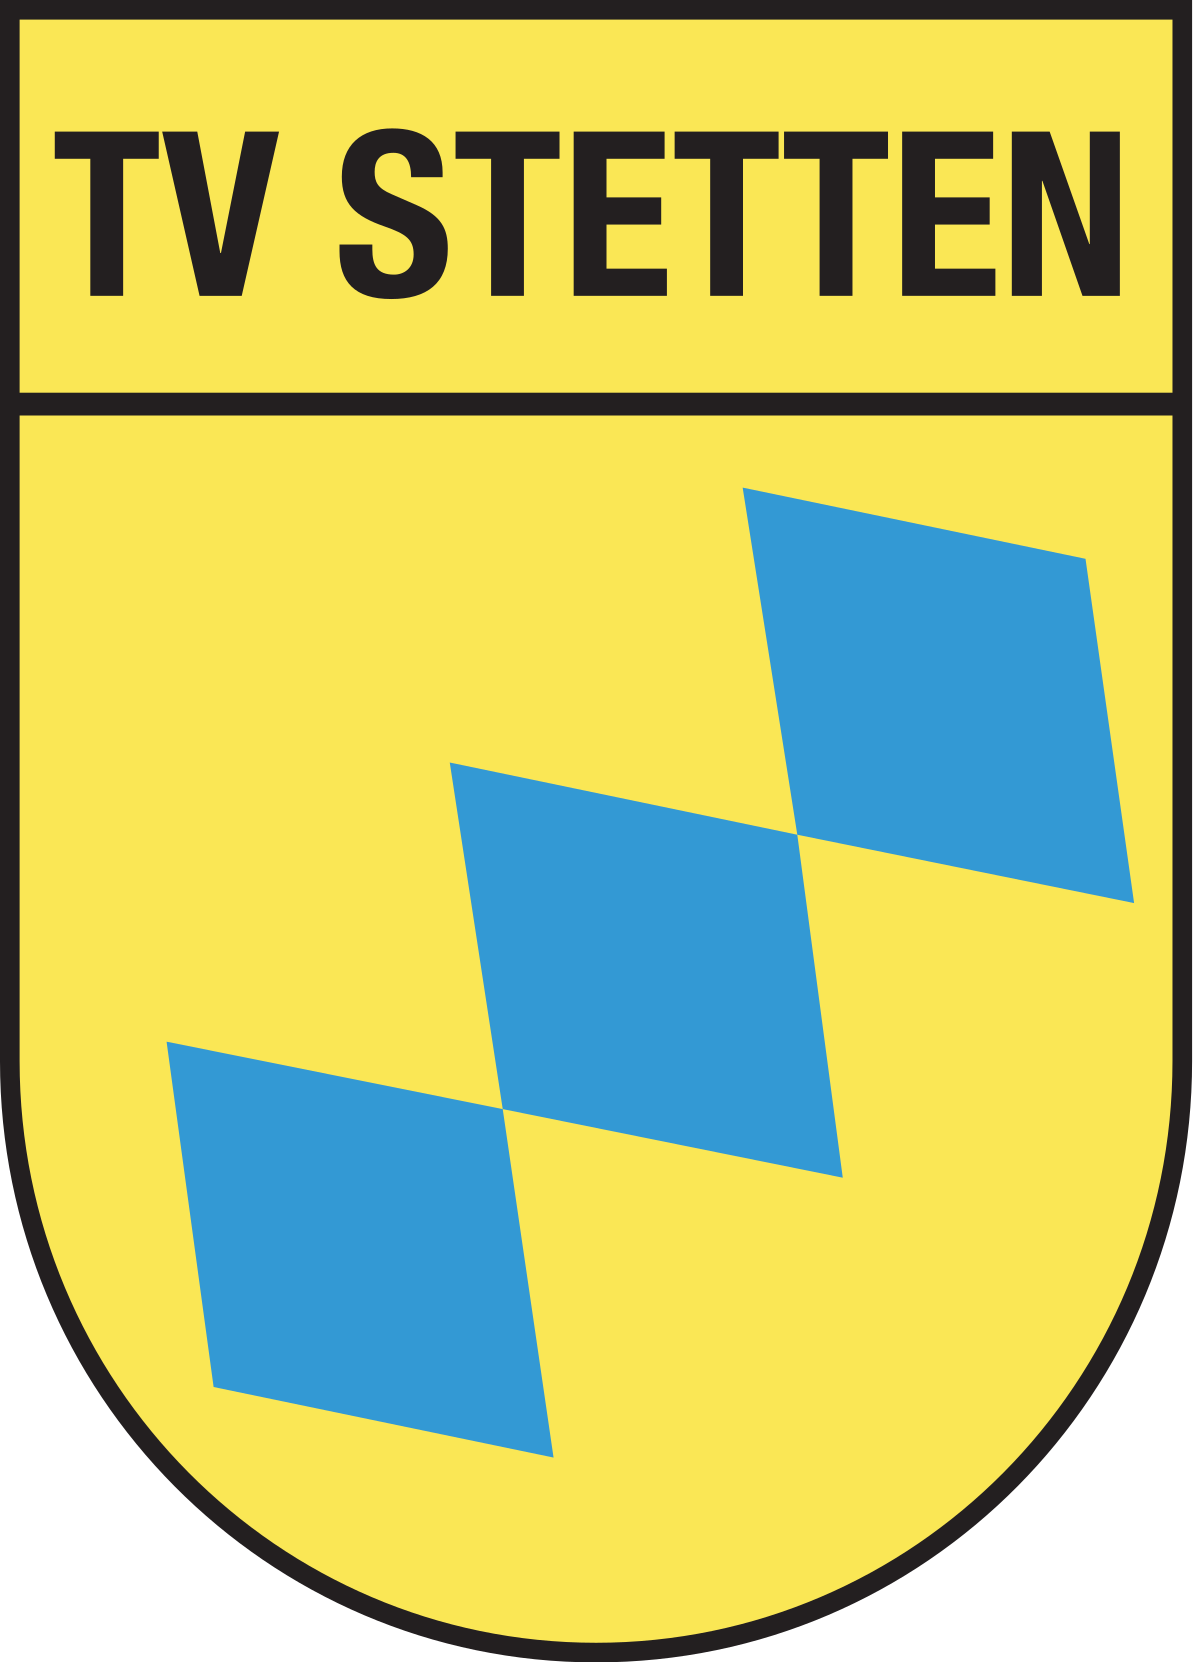 (c) Stetten-handball.de